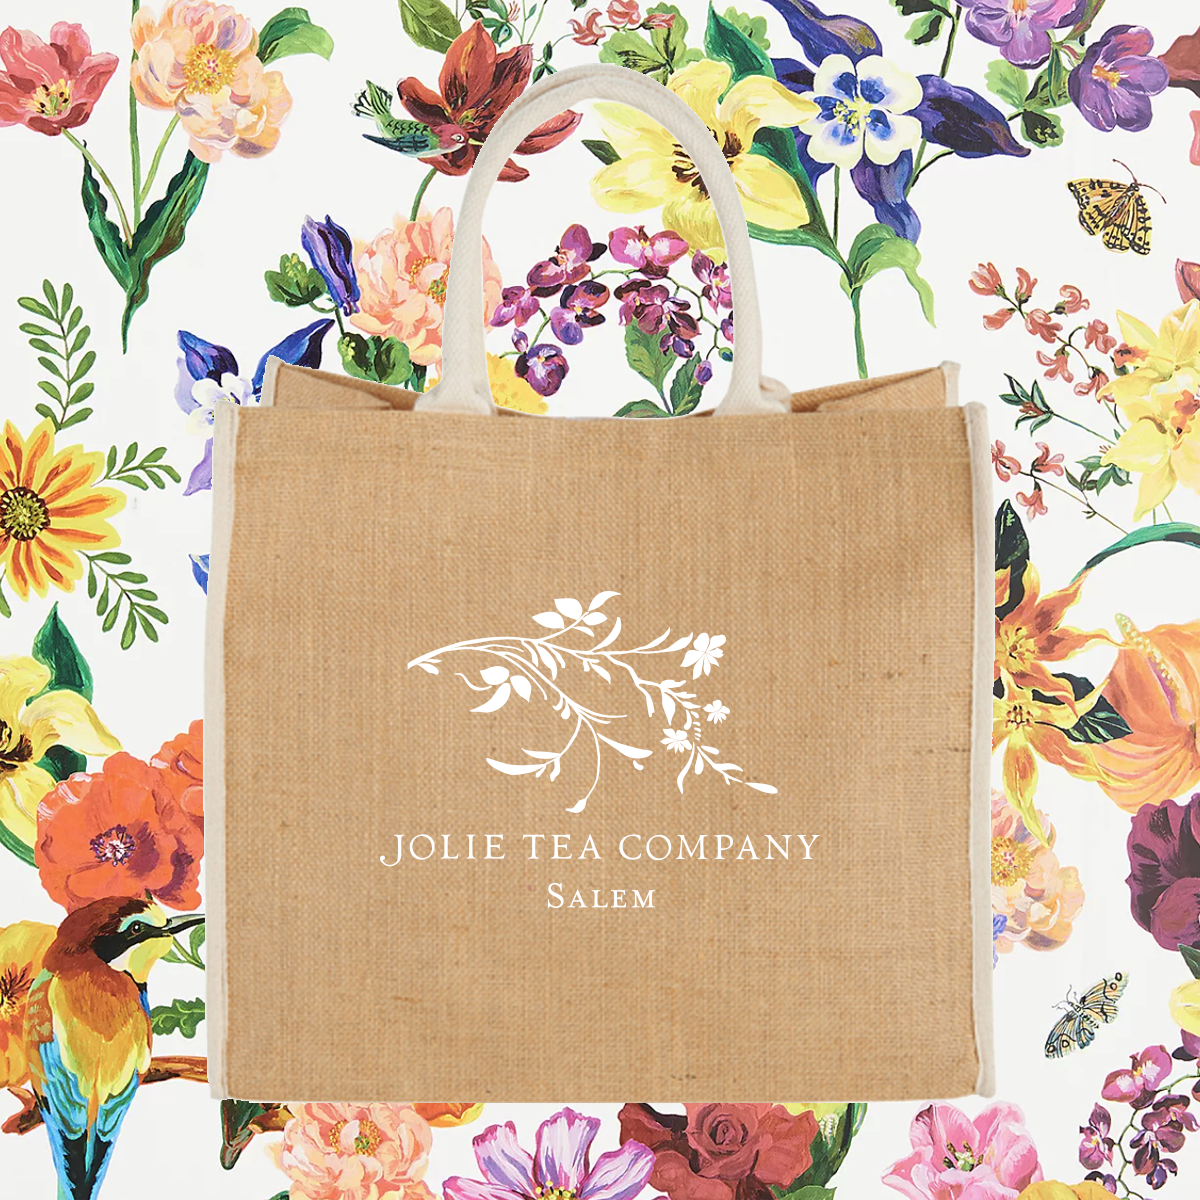 JTC Logo Merchandise– Jolie Tea Company